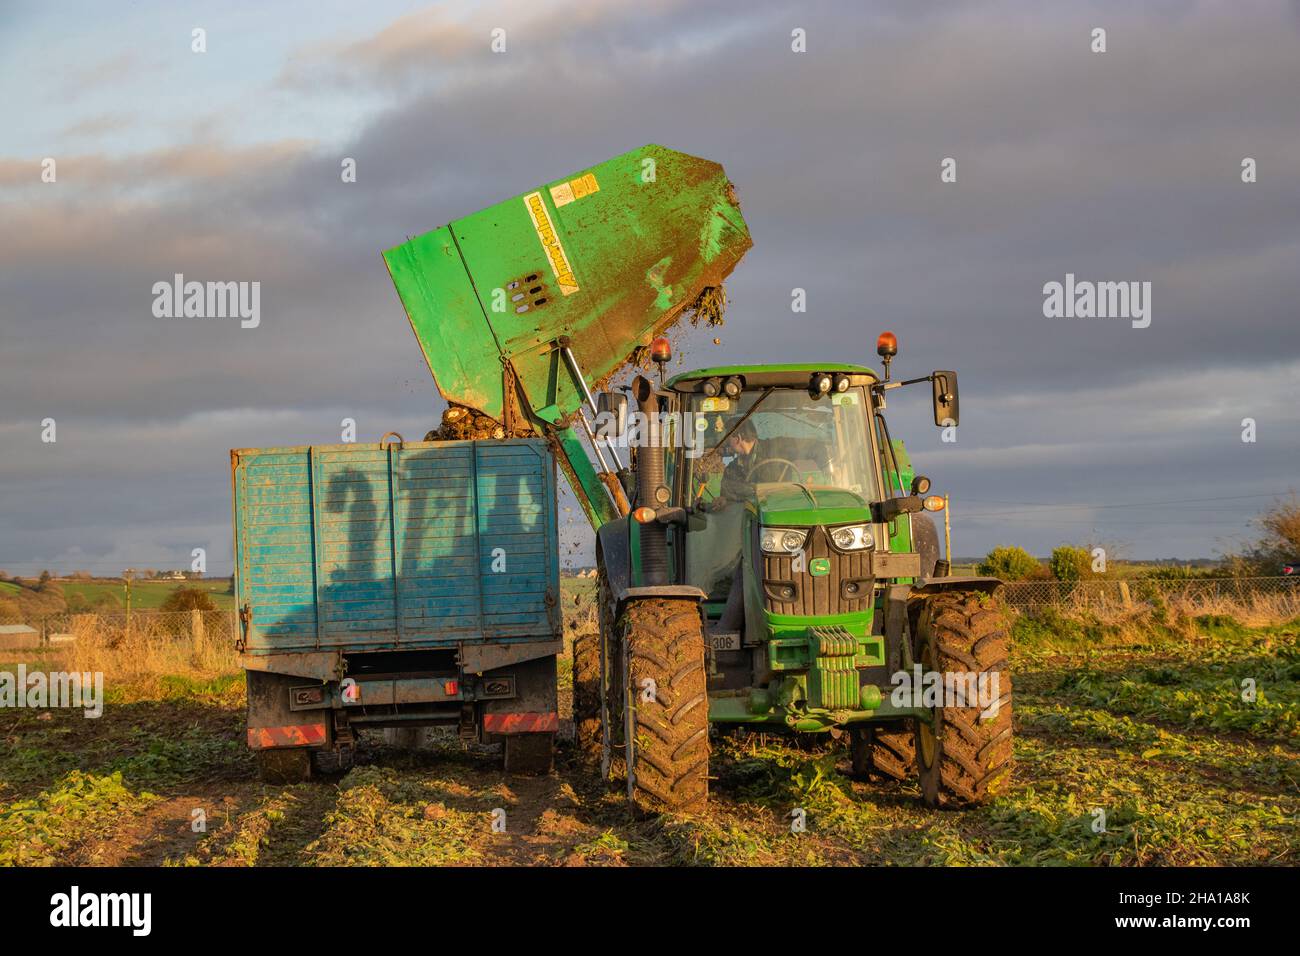 Armer Beet Harvester Stock Photo